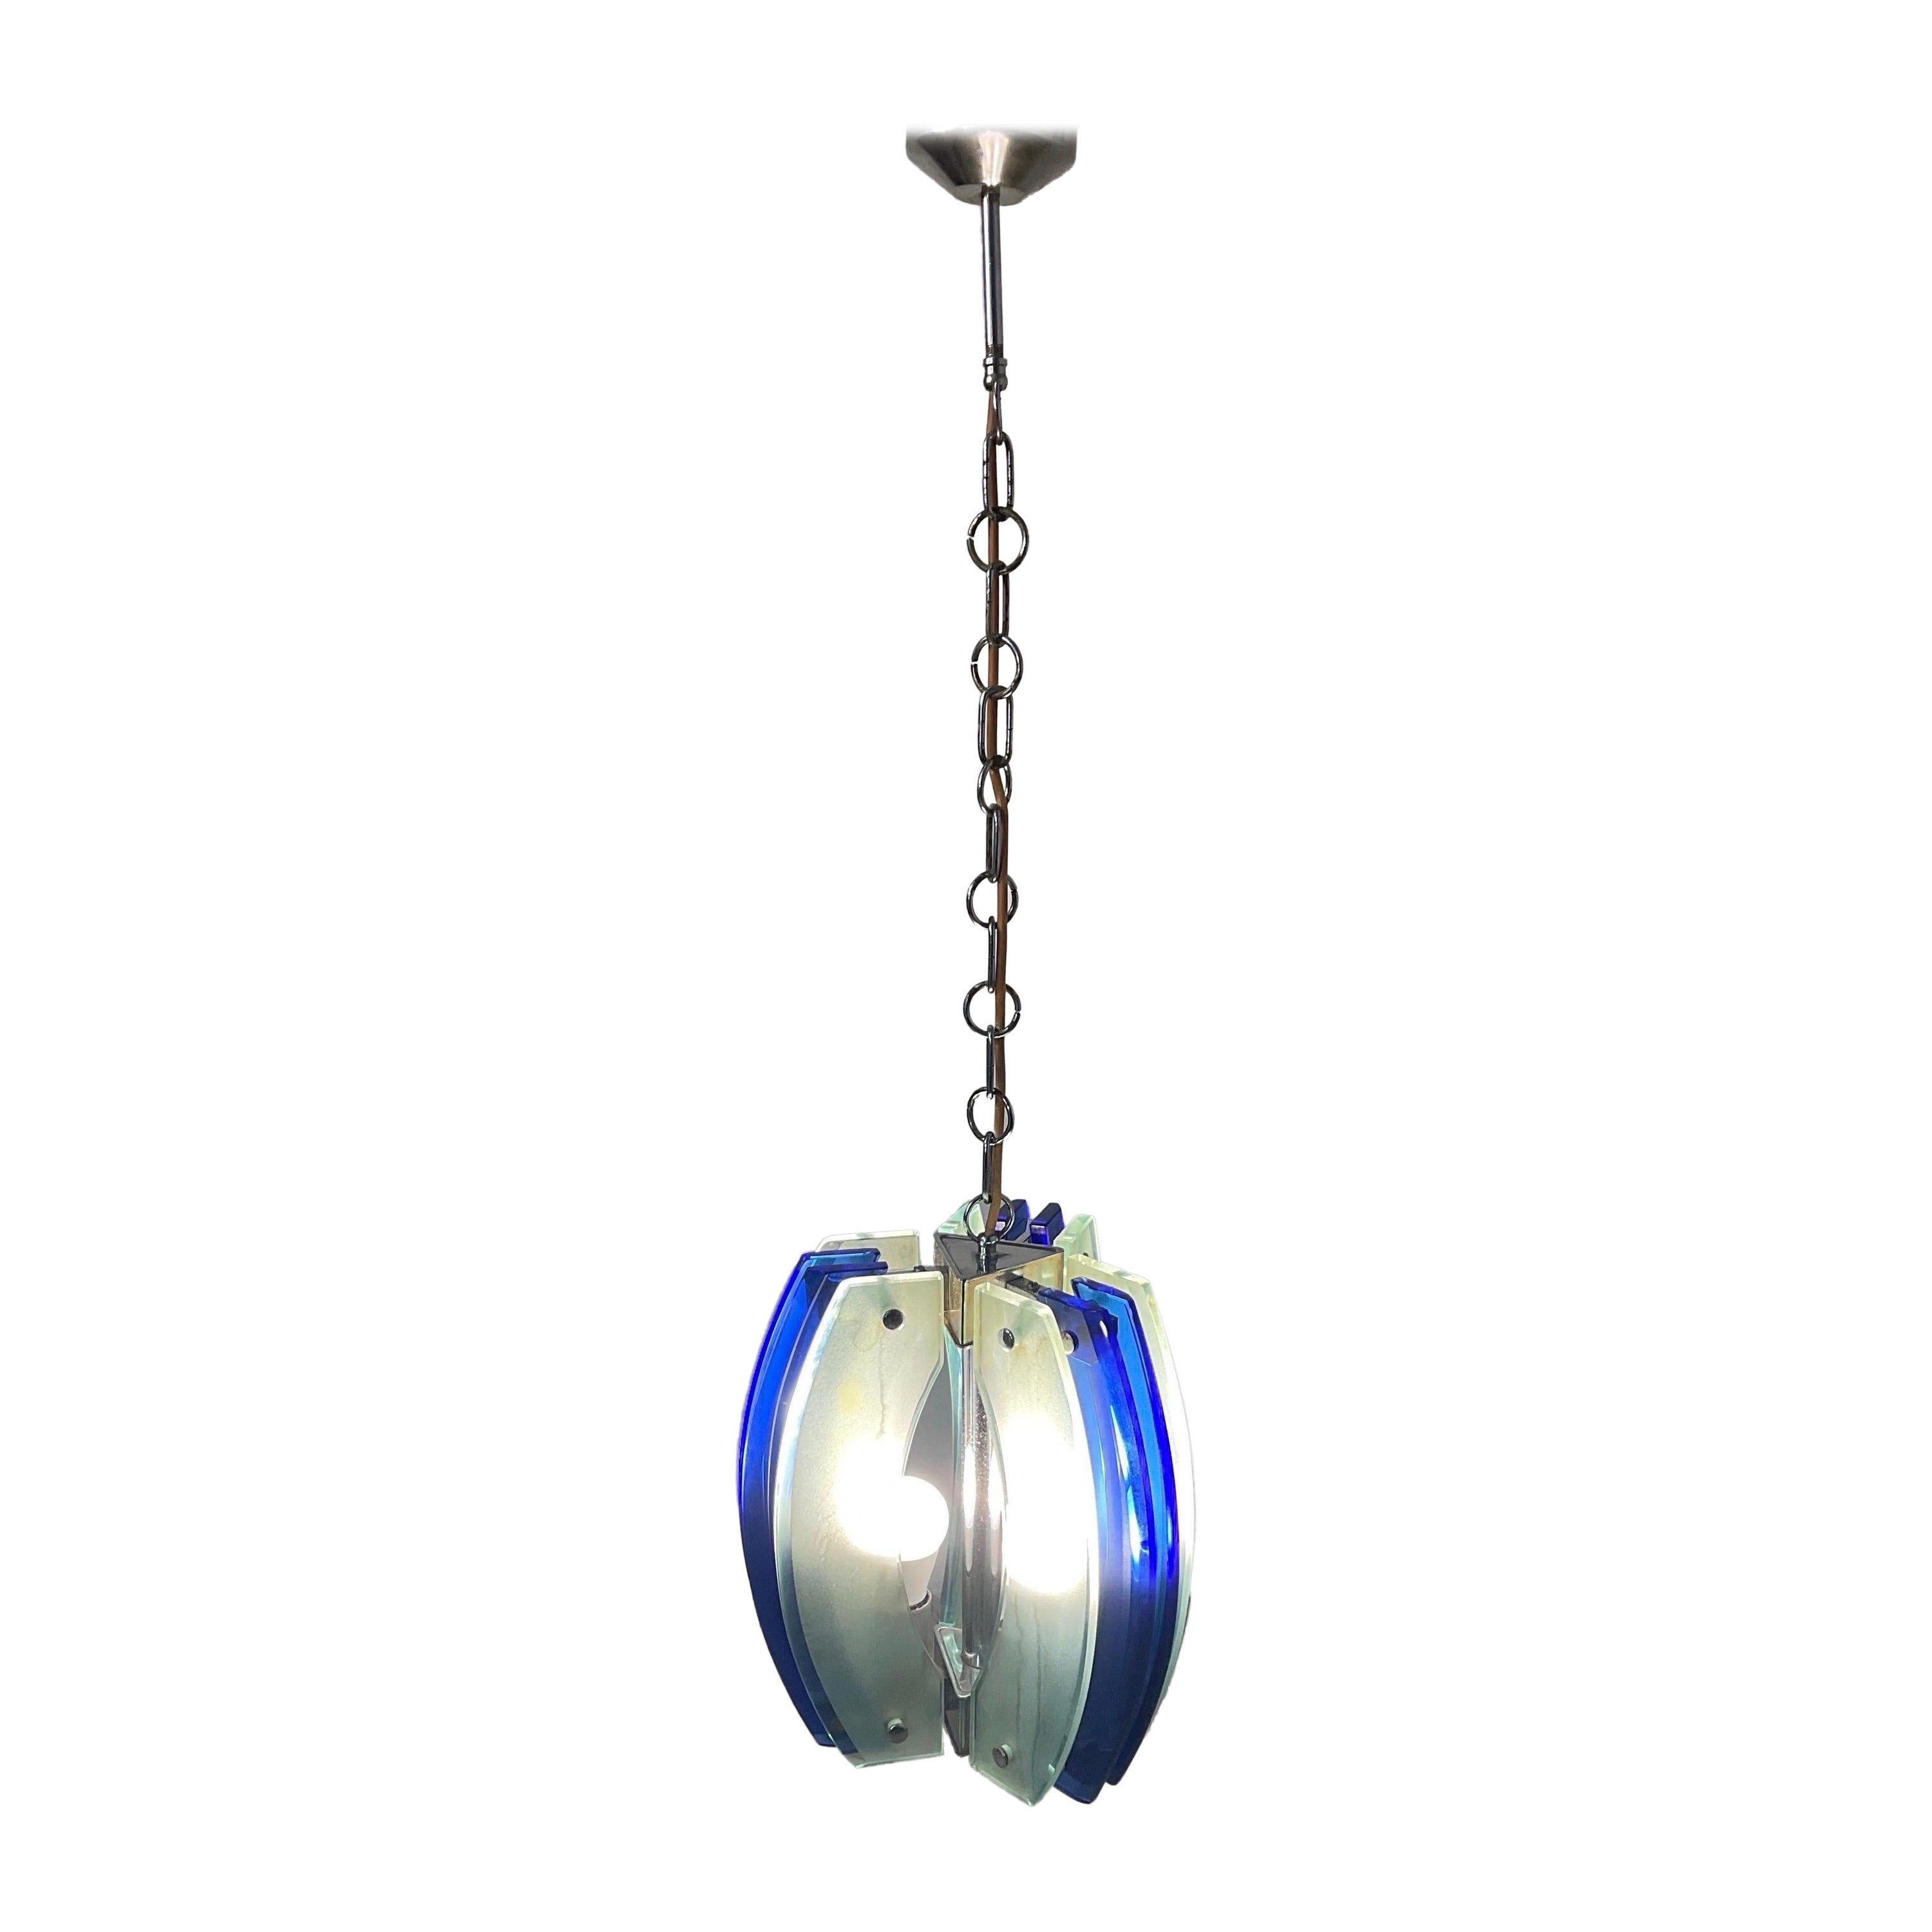 Three lights chandelier, colored glass attributable to Fontana Art